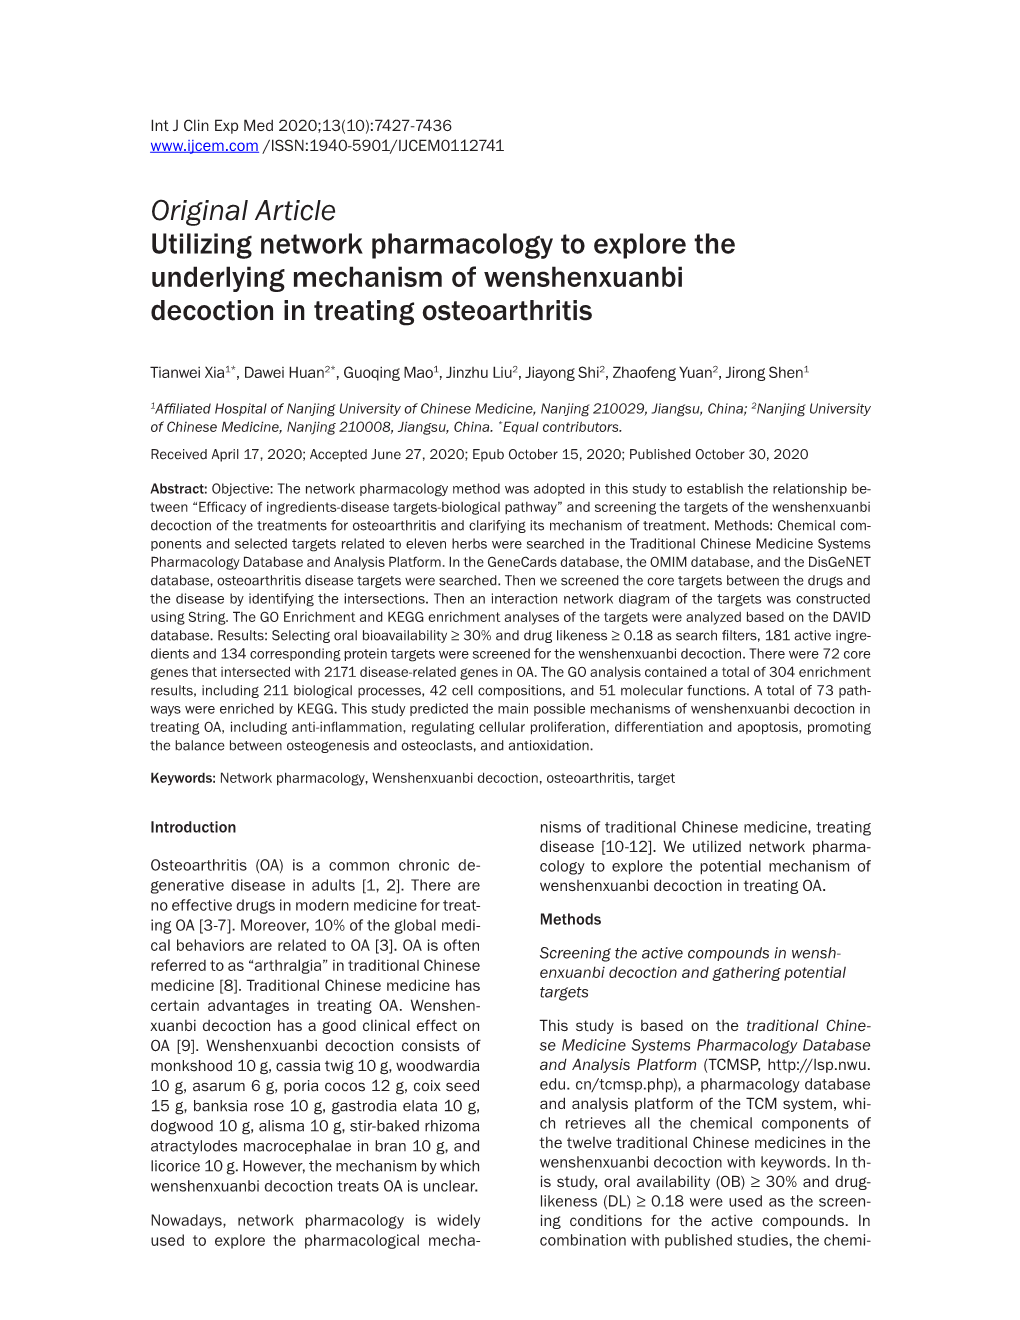 Original Article Utilizing Network Pharmacology to Explore the Underlying Mechanism of Wenshenxuanbi Decoction in Treating Osteoarthritis